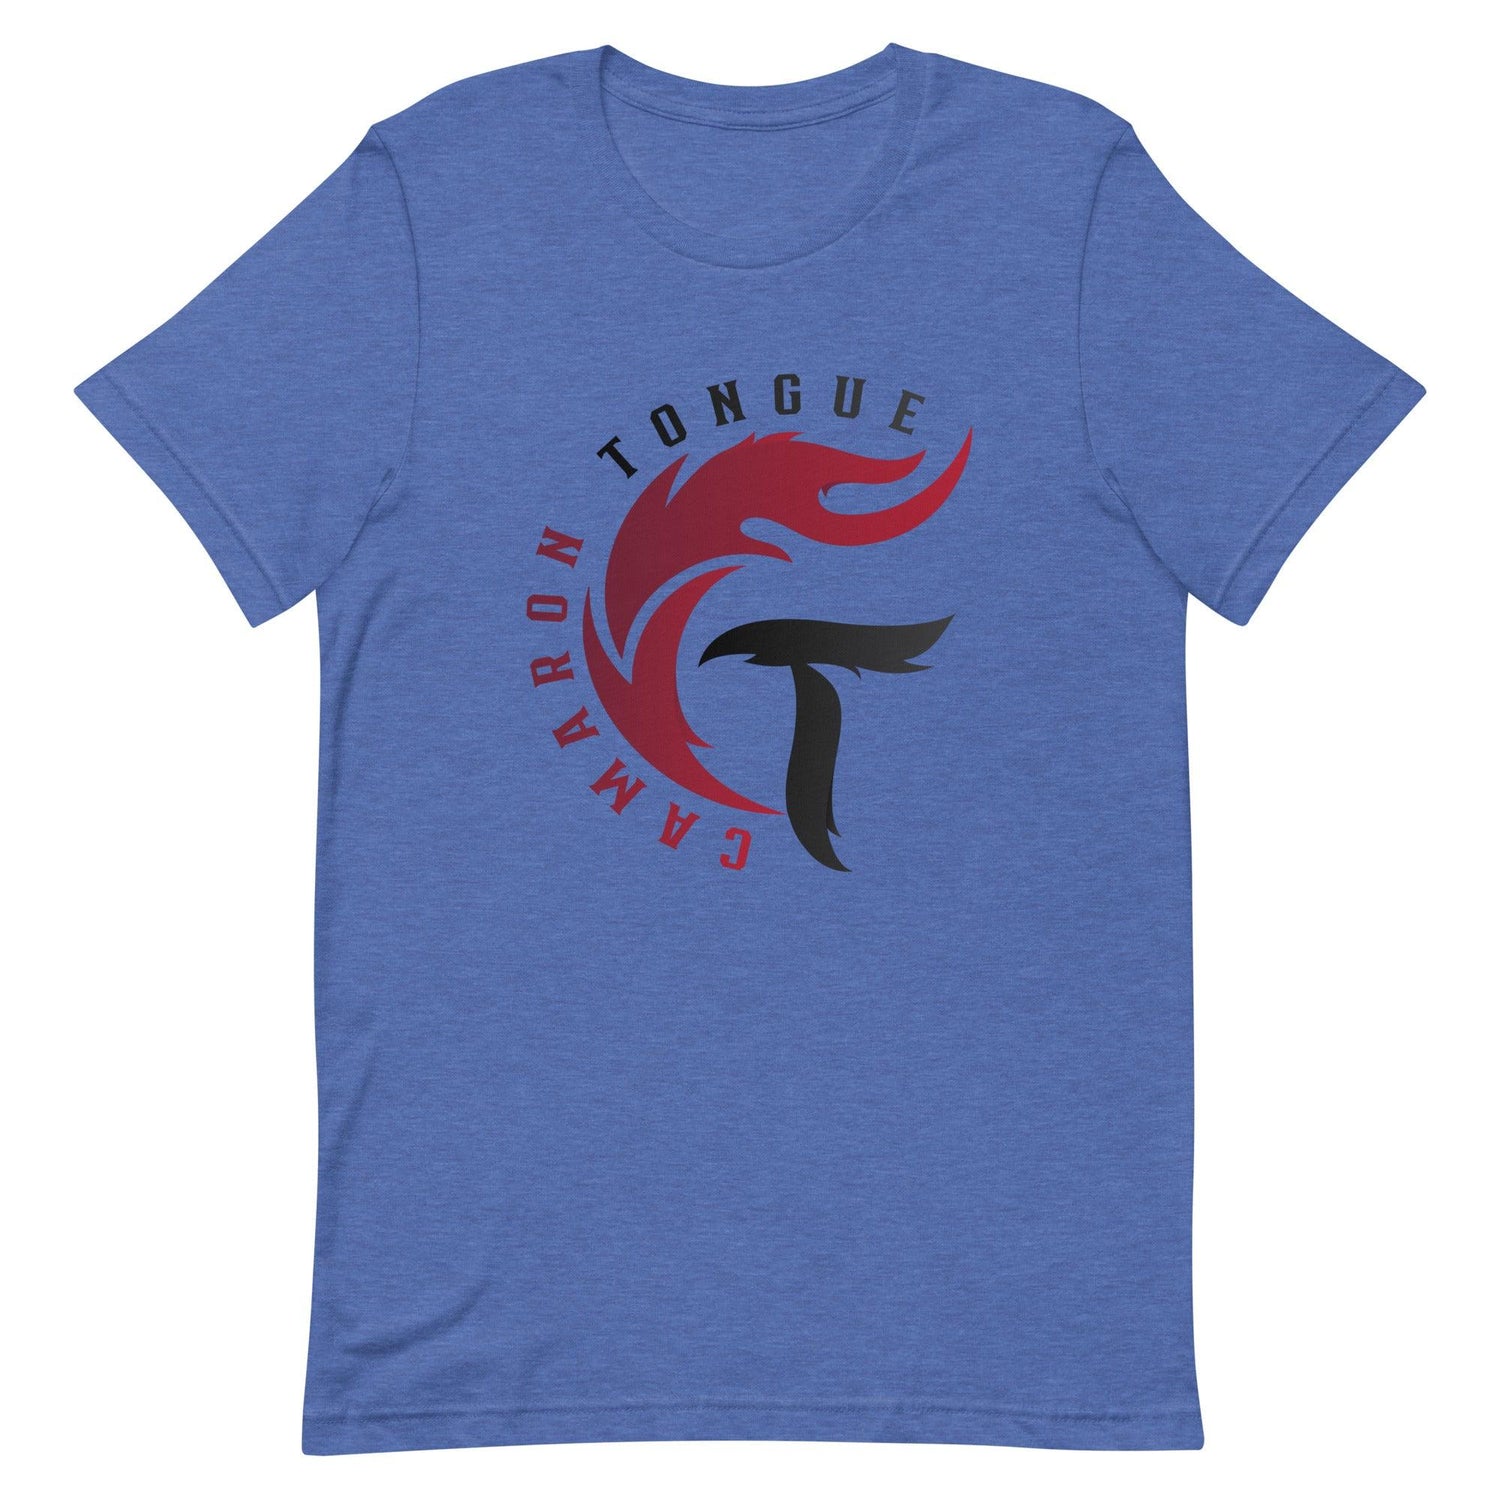 Camaron Tongue "Essential" t-shirt - Fan Arch